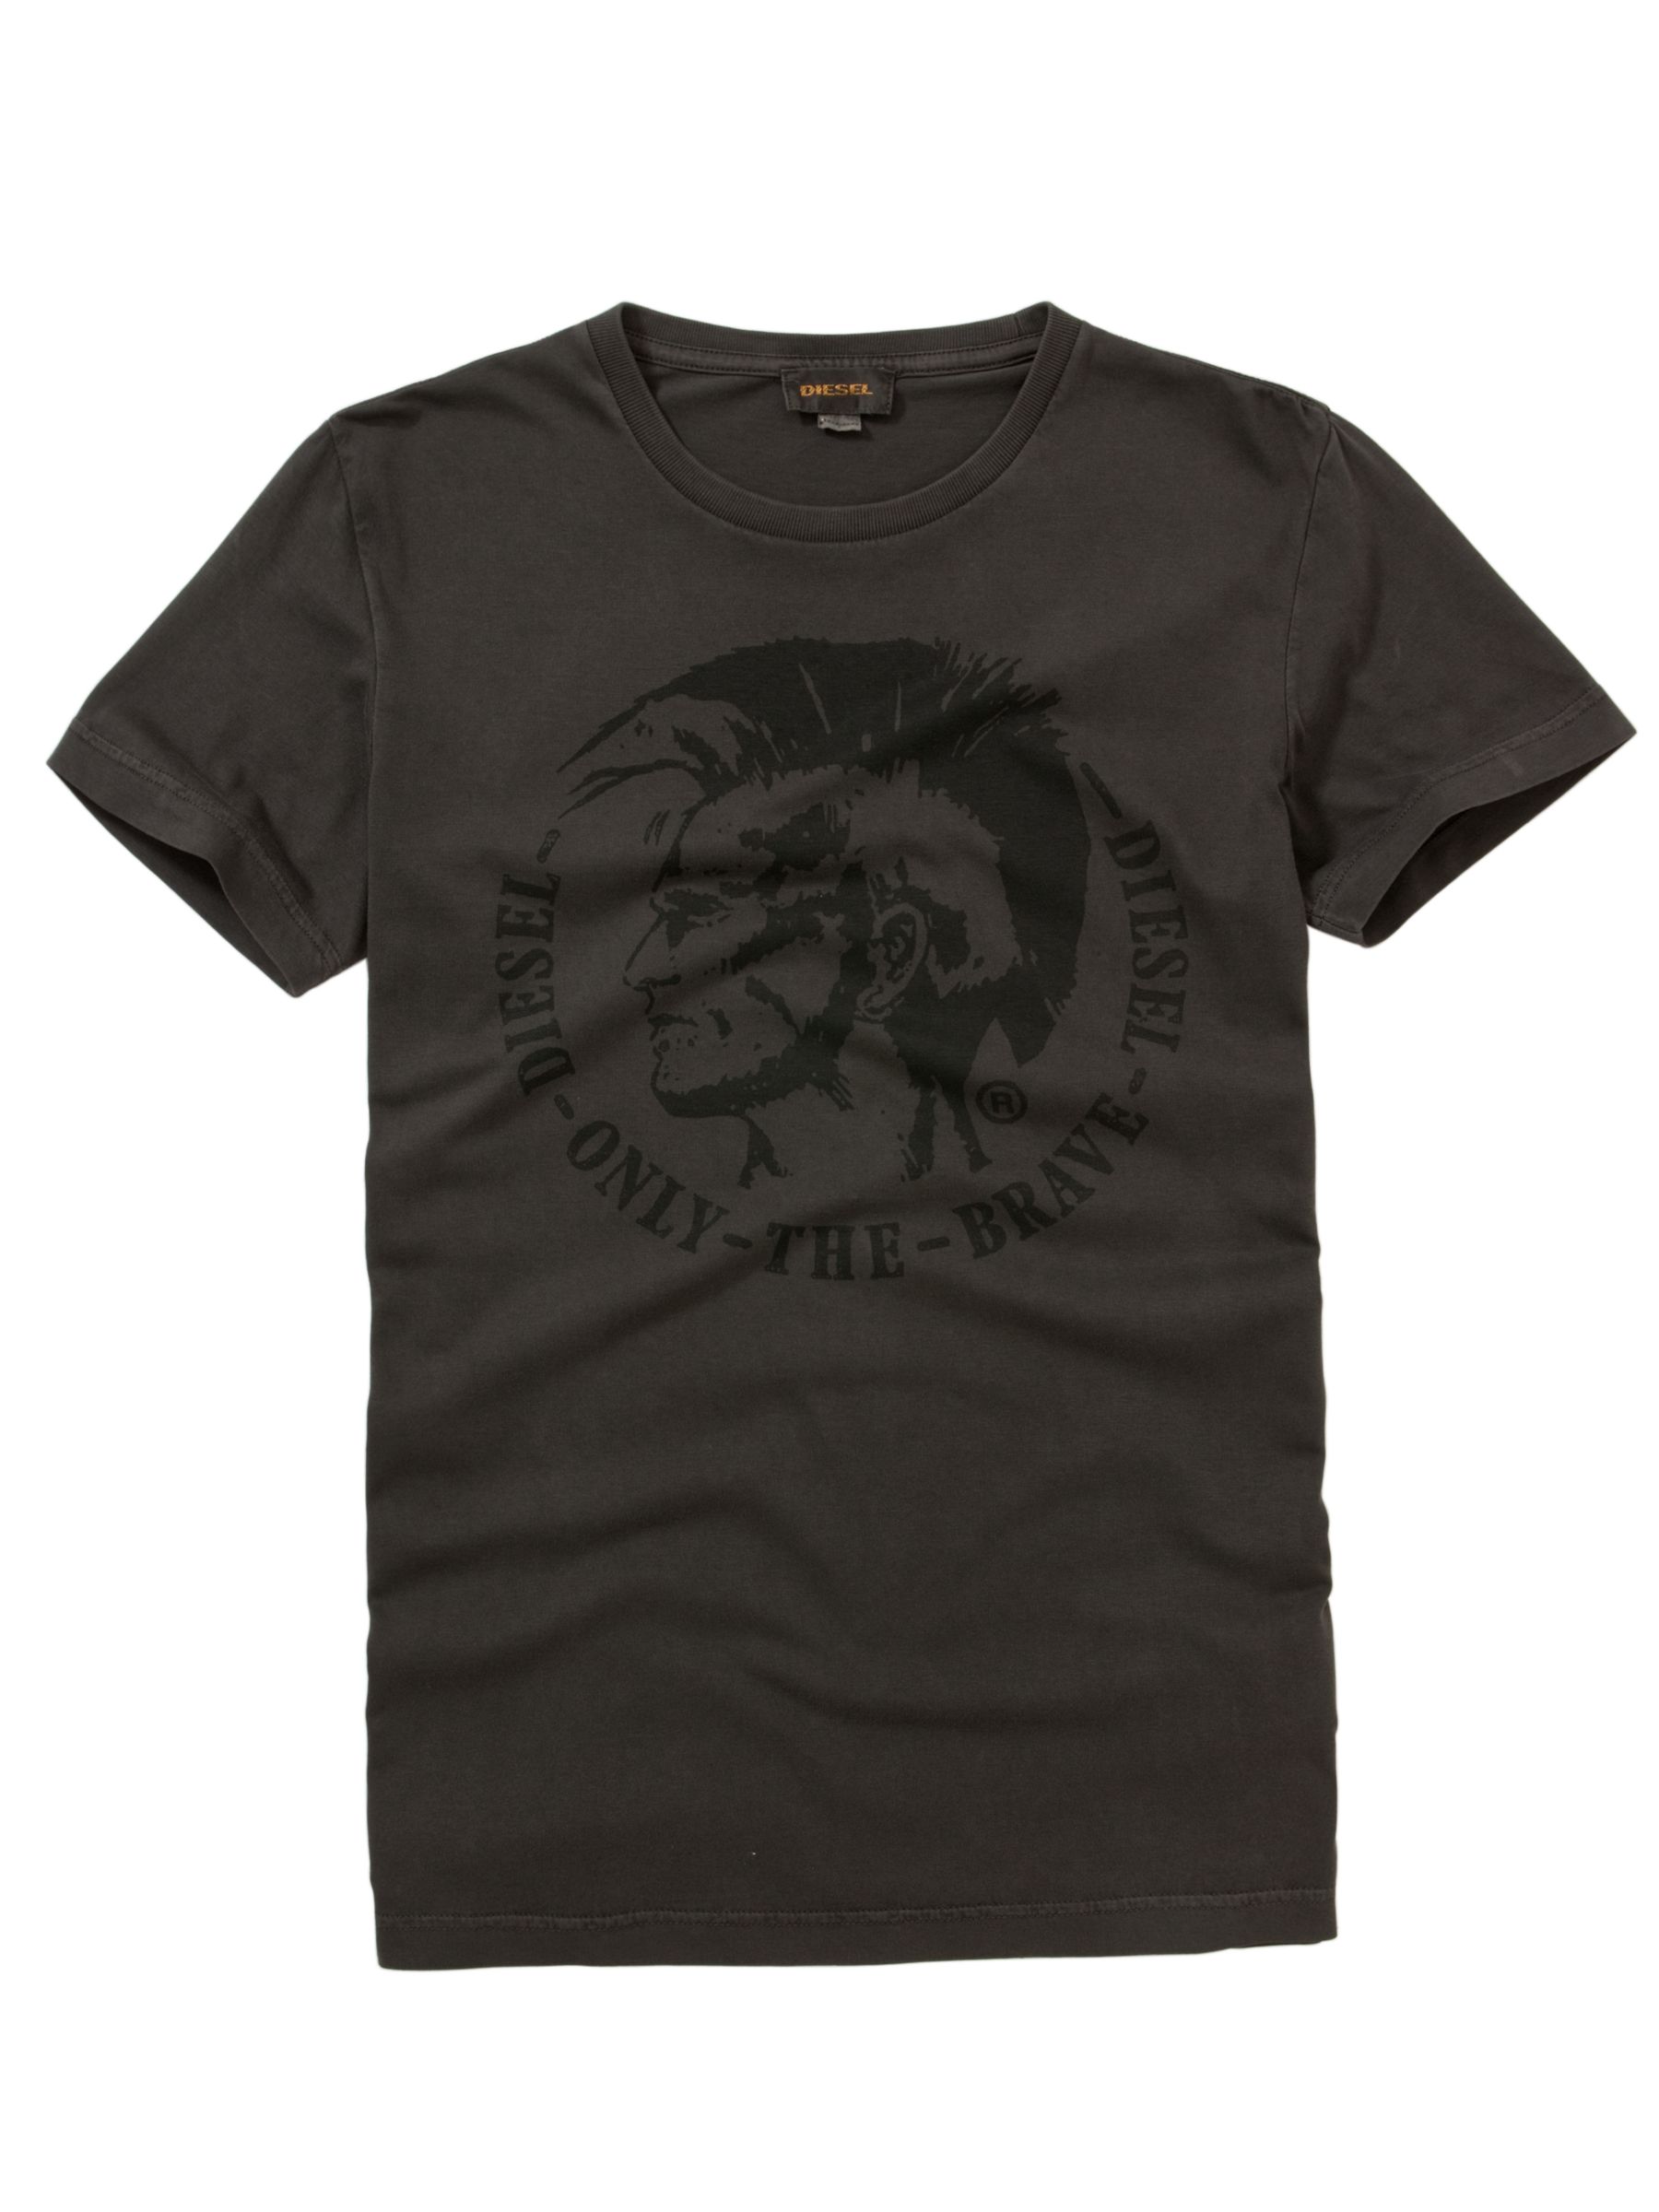 t shirts diesel grey t shirt with black & navy logo